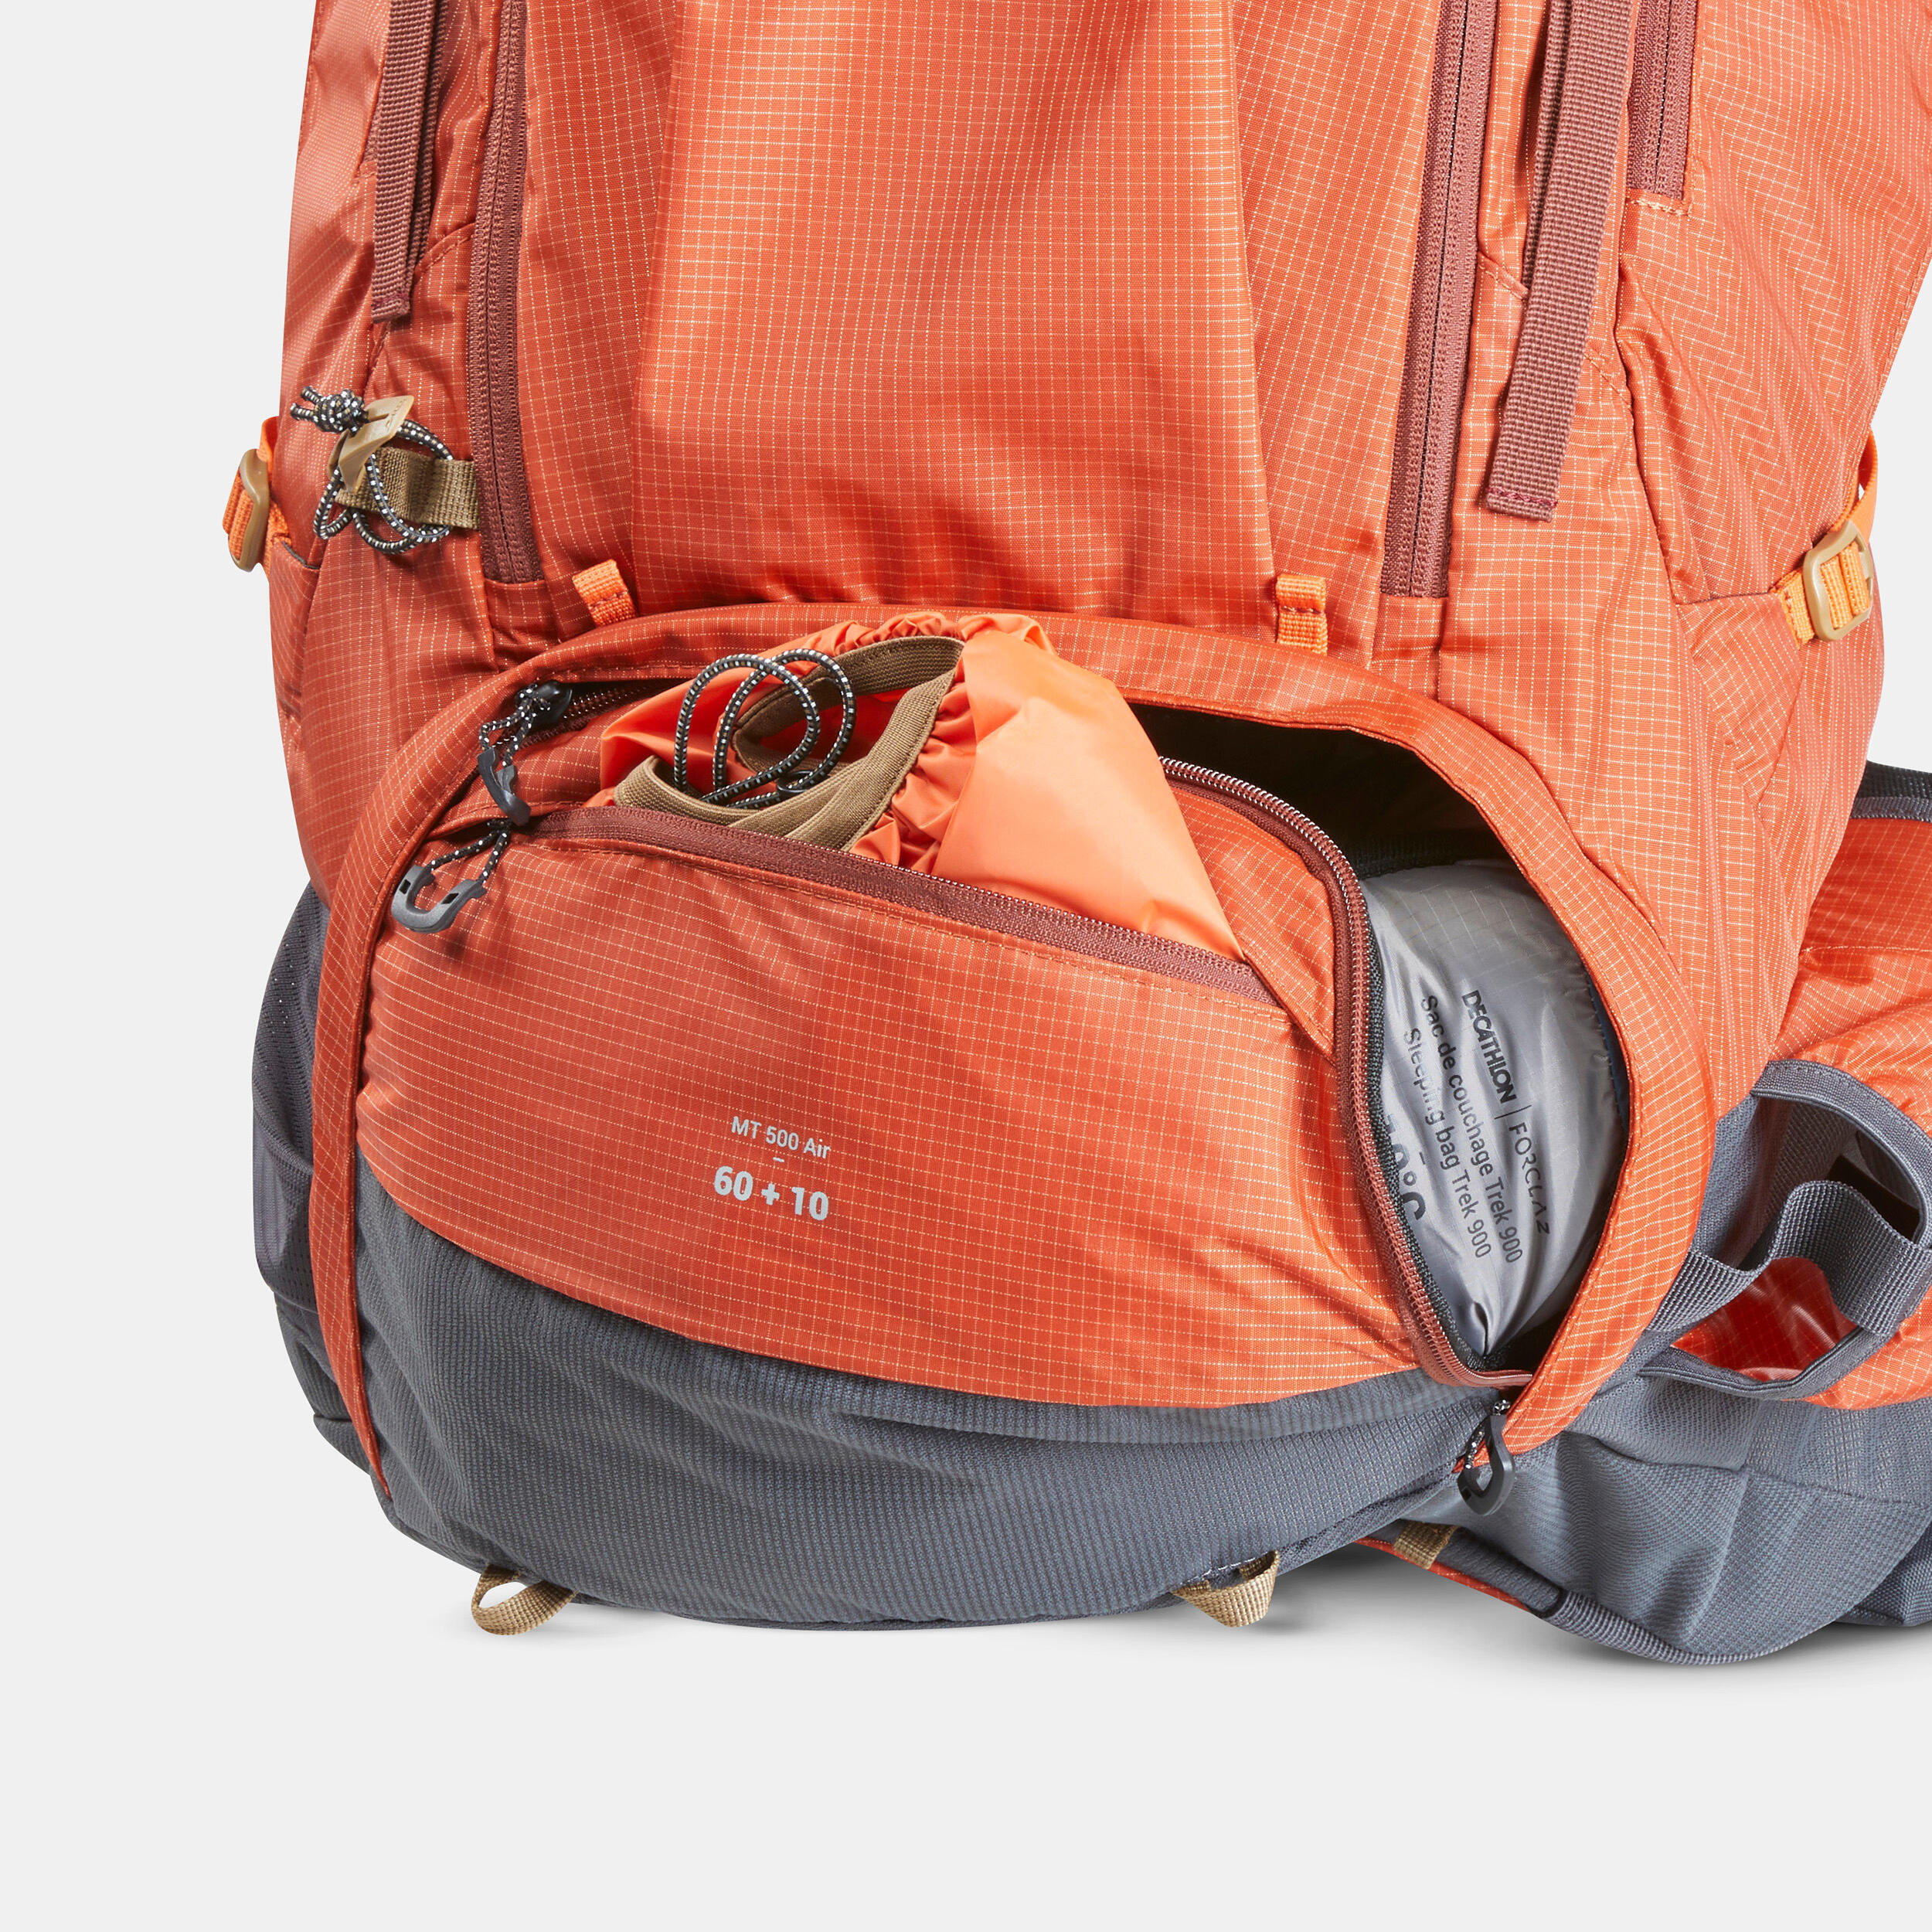 Men's Trekking Backpack 60+10 L - MT500 AIR 11/15